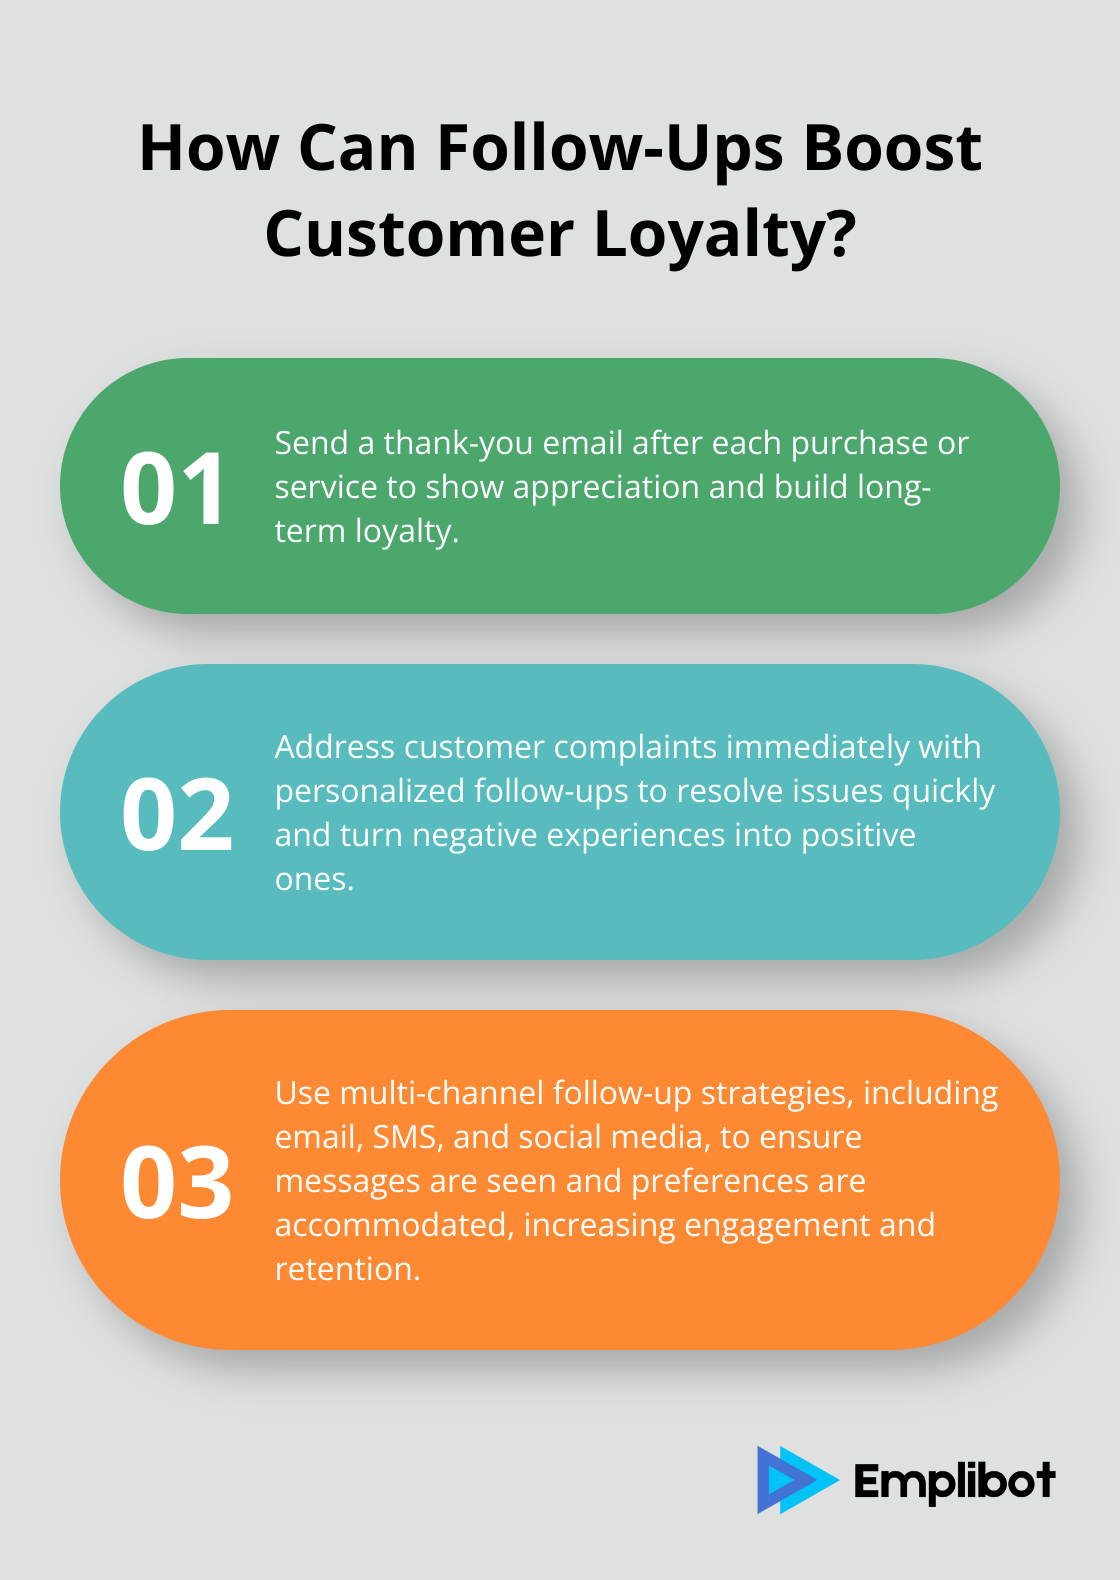 Fact - How Can Follow-Ups Boost Customer Loyalty?